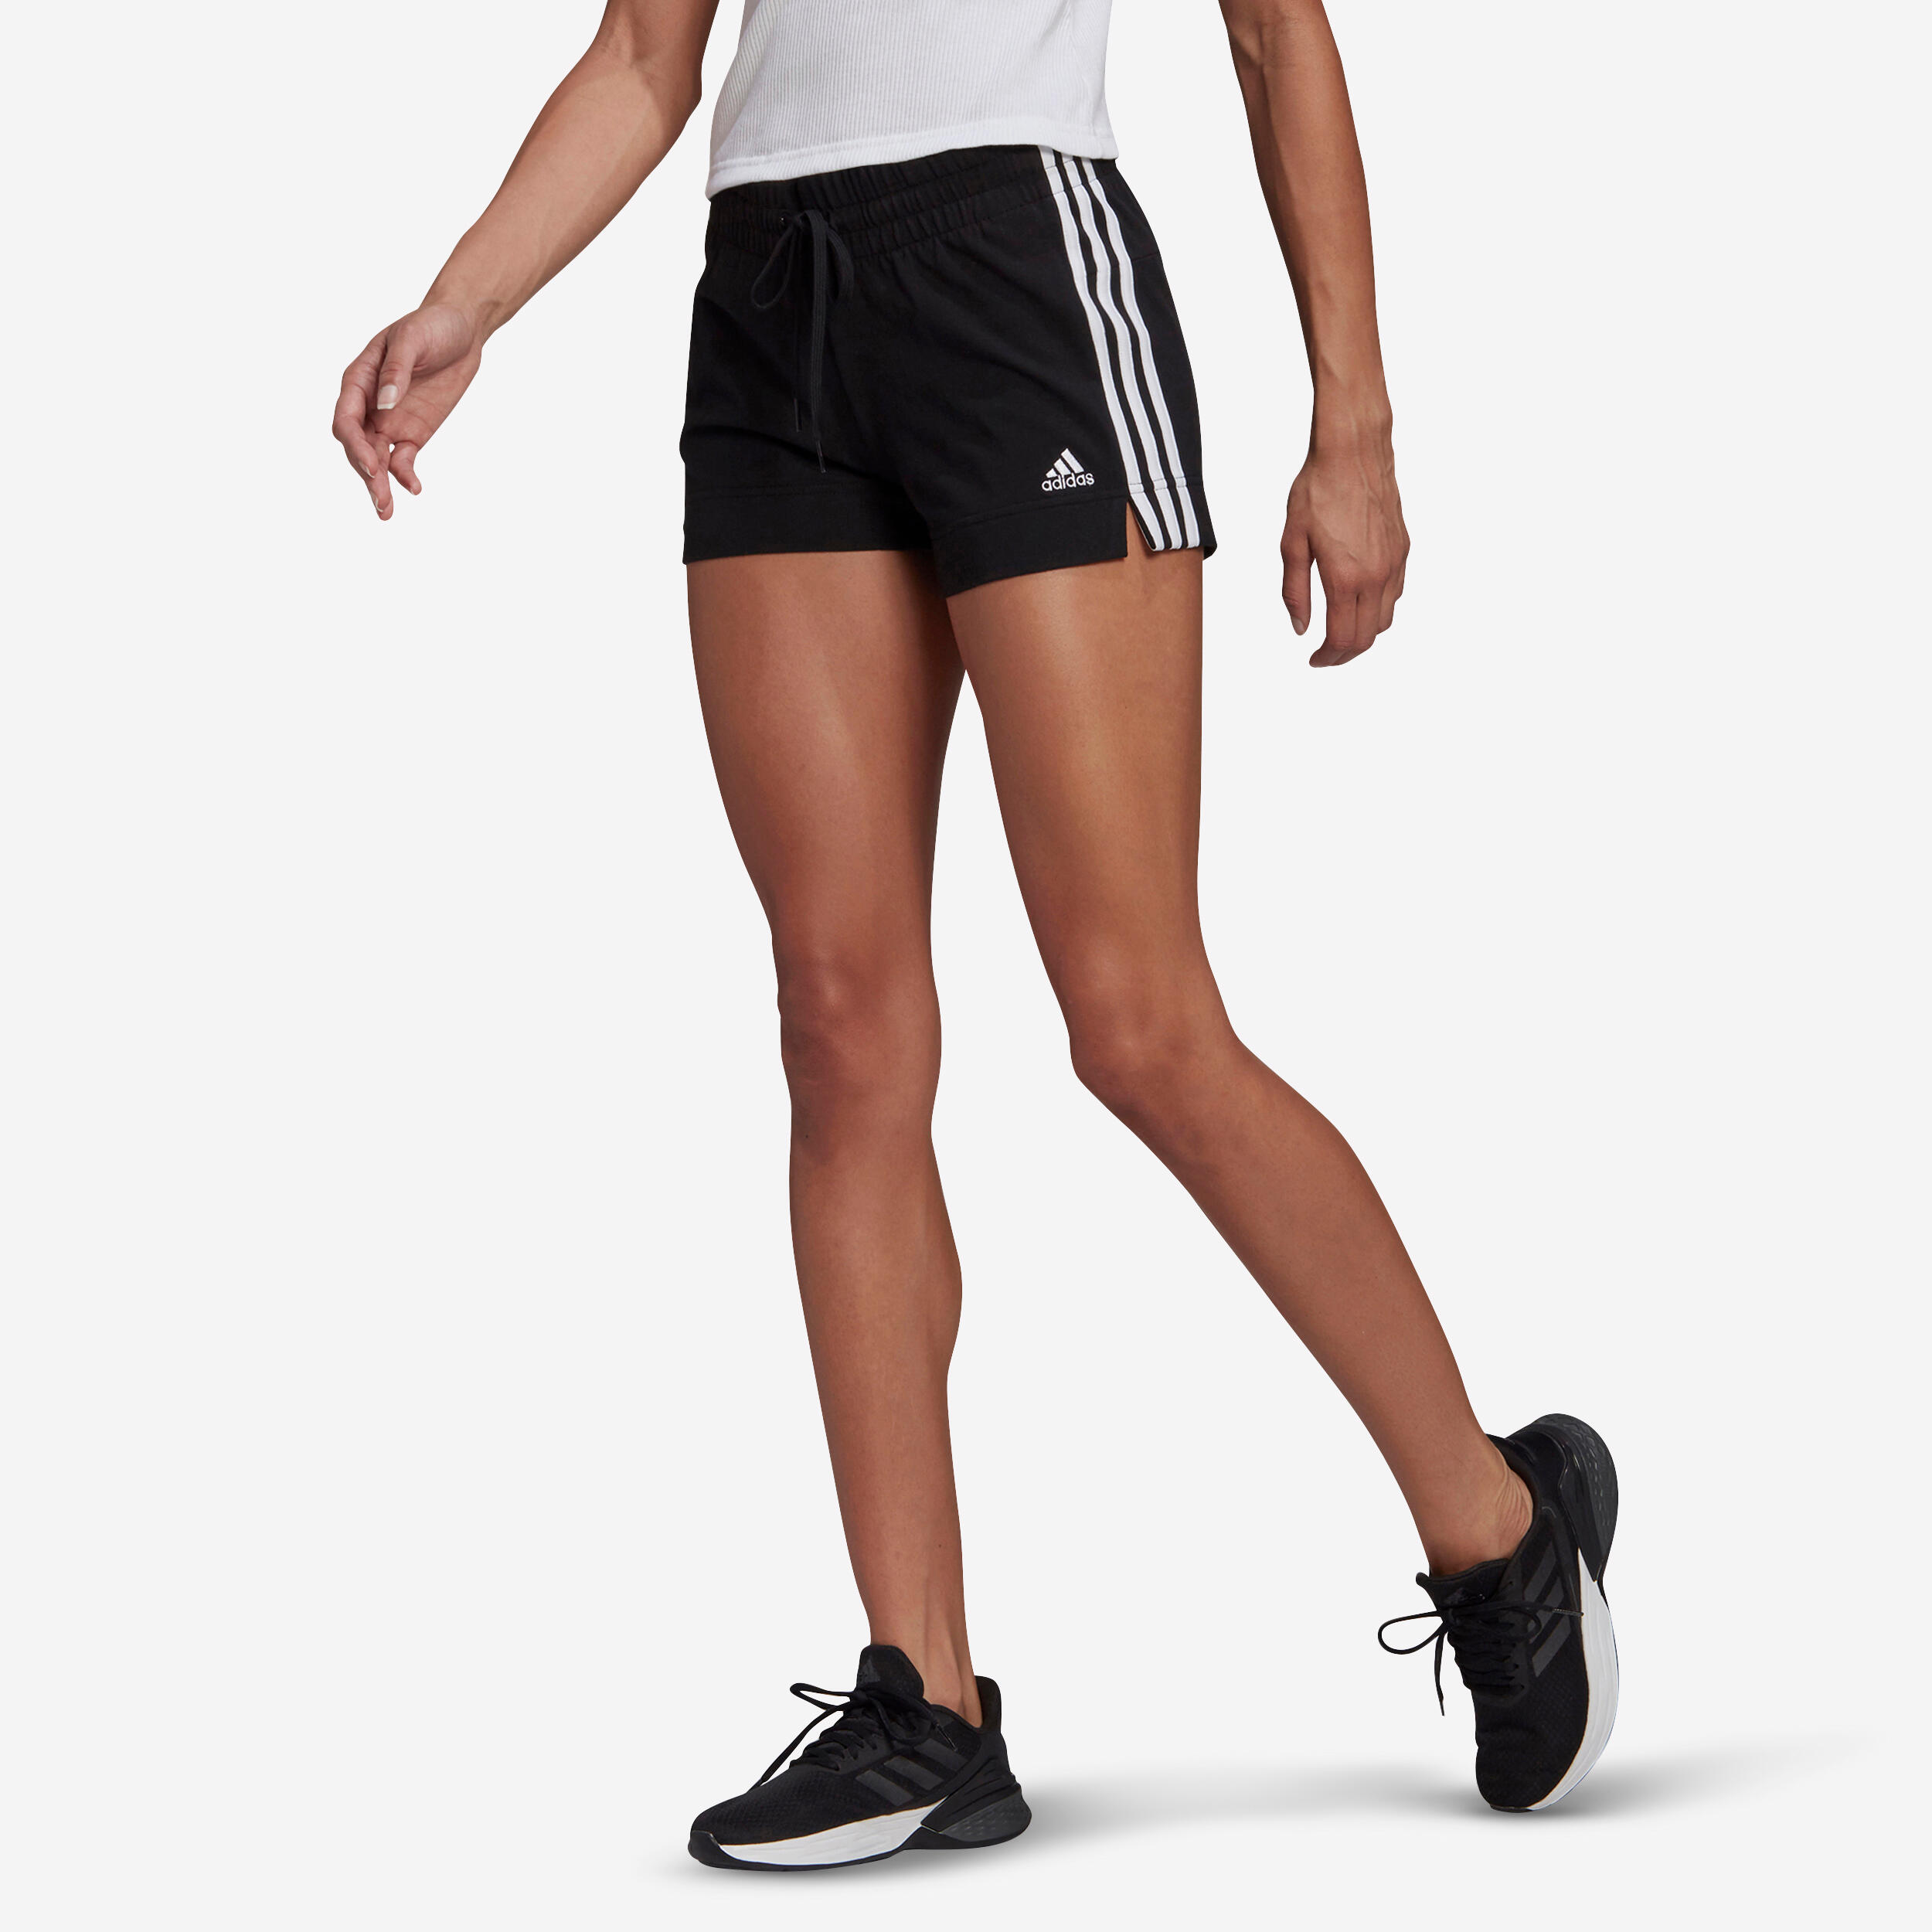 Pantaloncini donna fitness Adidas 3 stripes cotone leggero neri e bianchi |  DECATHLON